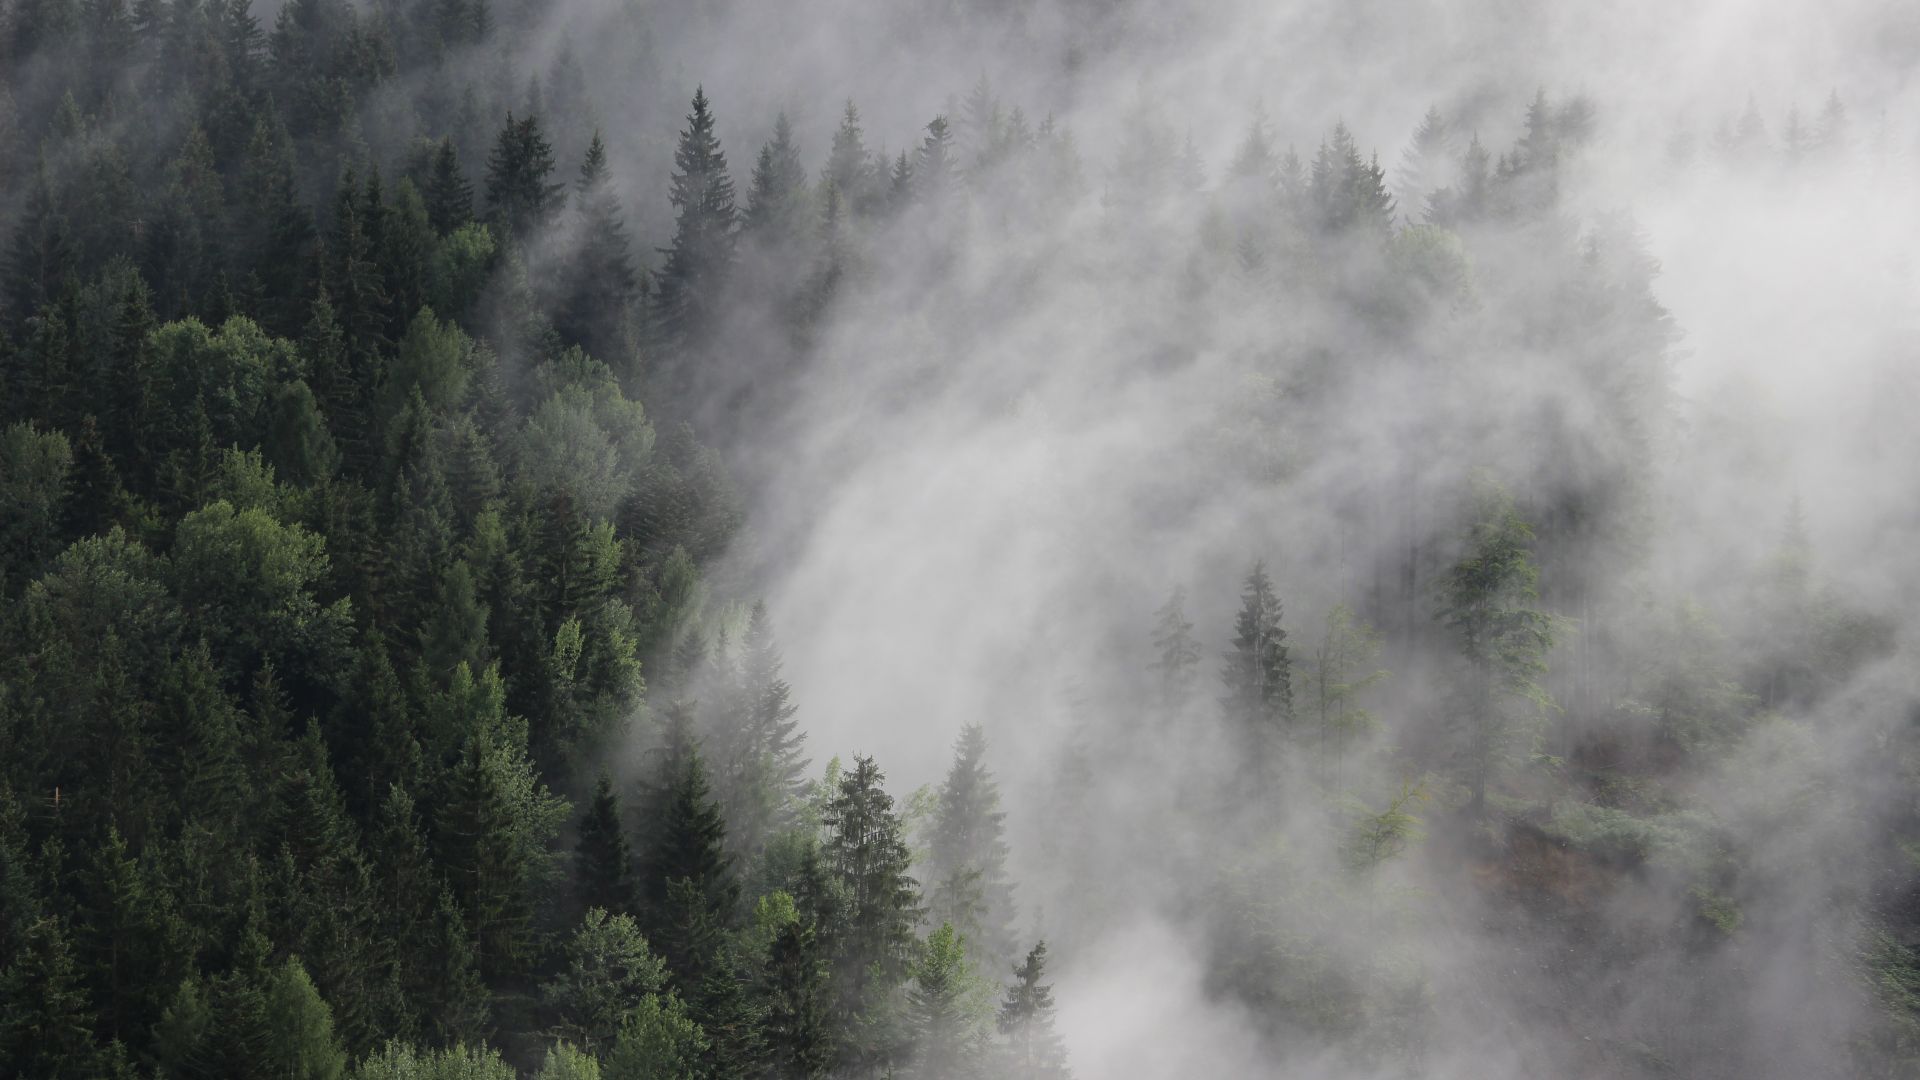 Австрия, 4k, 5k, 8k, лес, туман, сосны, Austria, 4k, 5k wallpaper, 8k, forest, fog, mist, pines (horizontal)